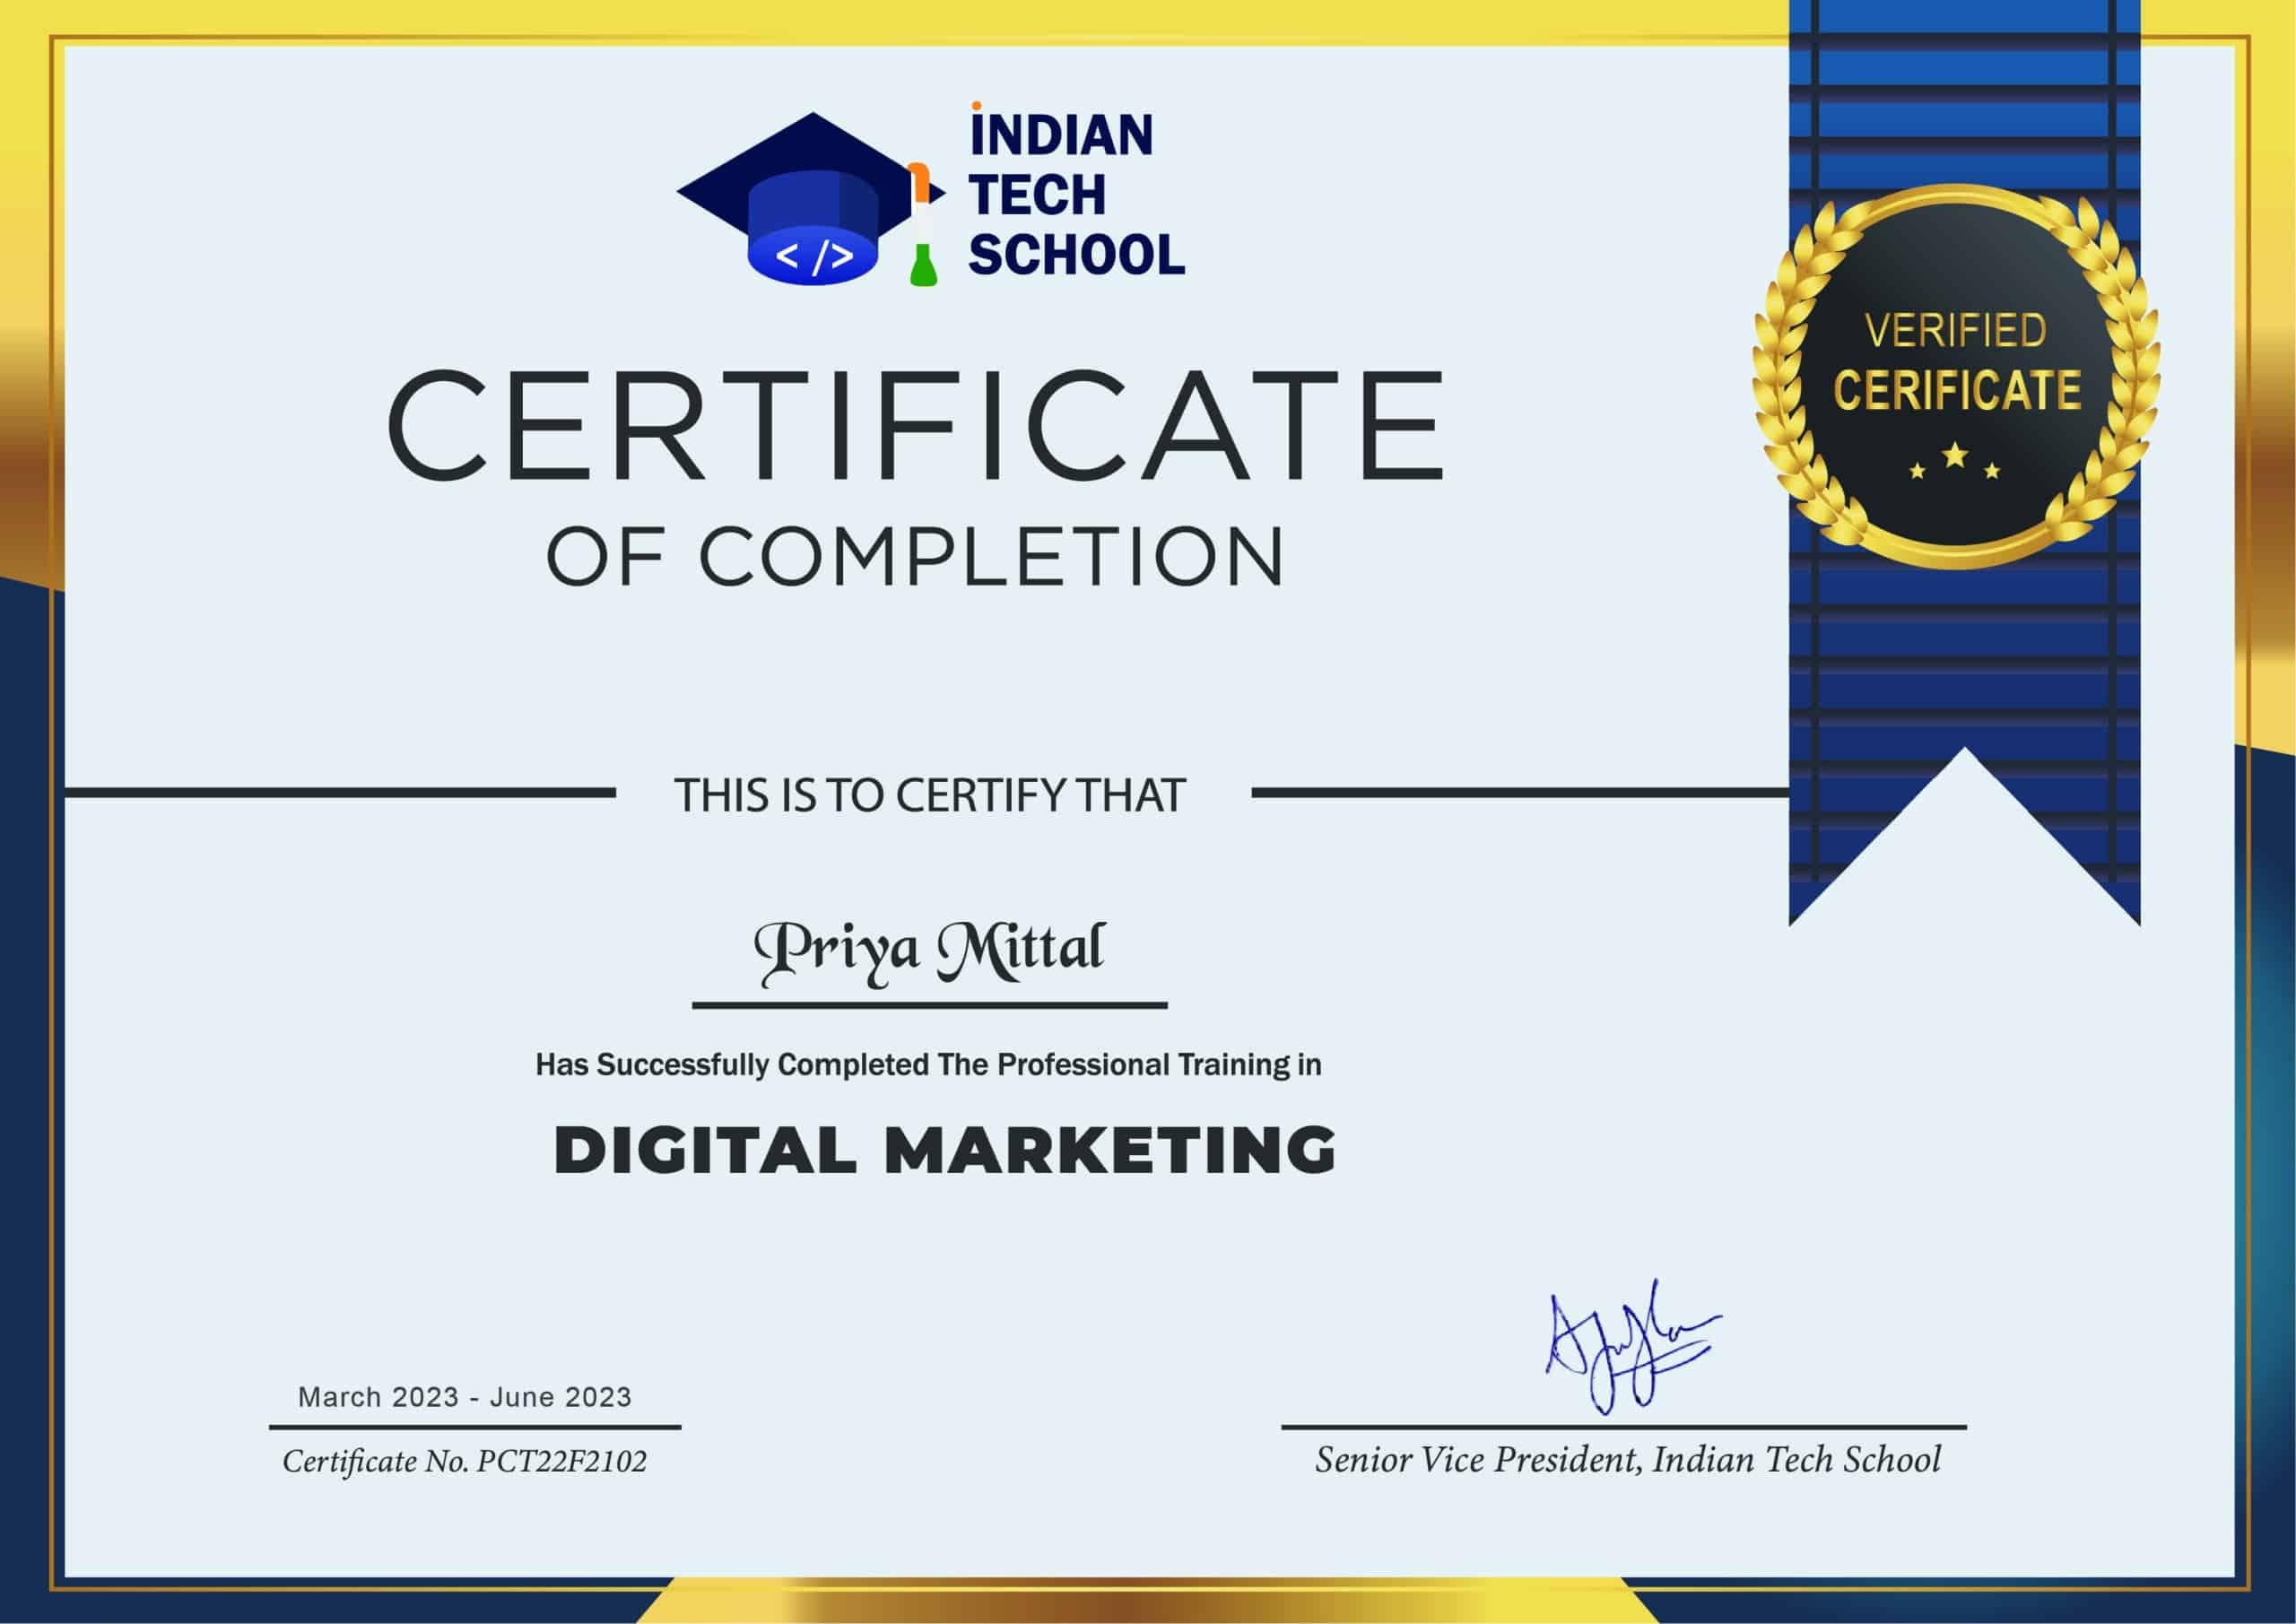 Digital marketing Course Certificate at Indian Tech School Jaipur